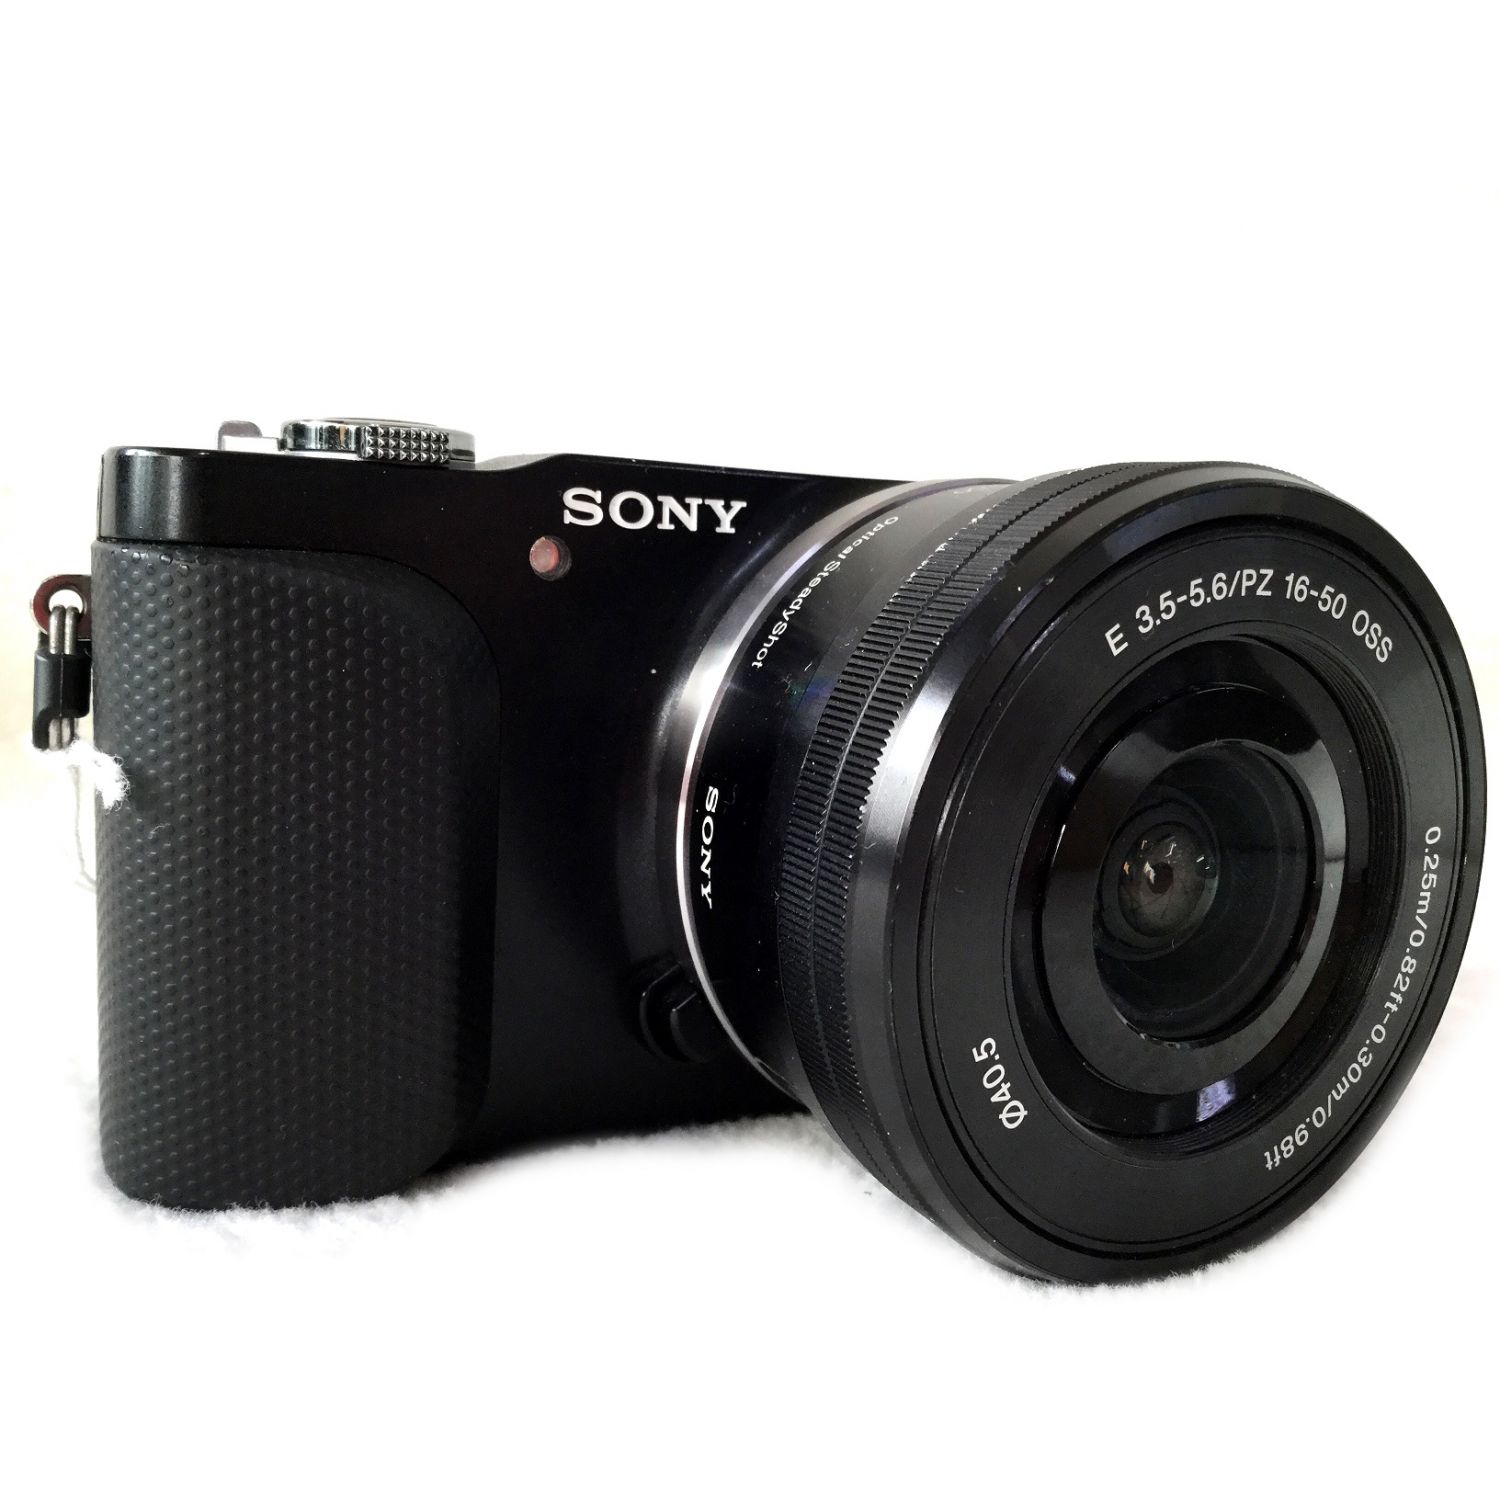 SONY レンズ交換式ミラーレスデジタルカメラ NEX-3N 1650万画素 専用電池 0024245 NEX-3N｜トレファクONLINE